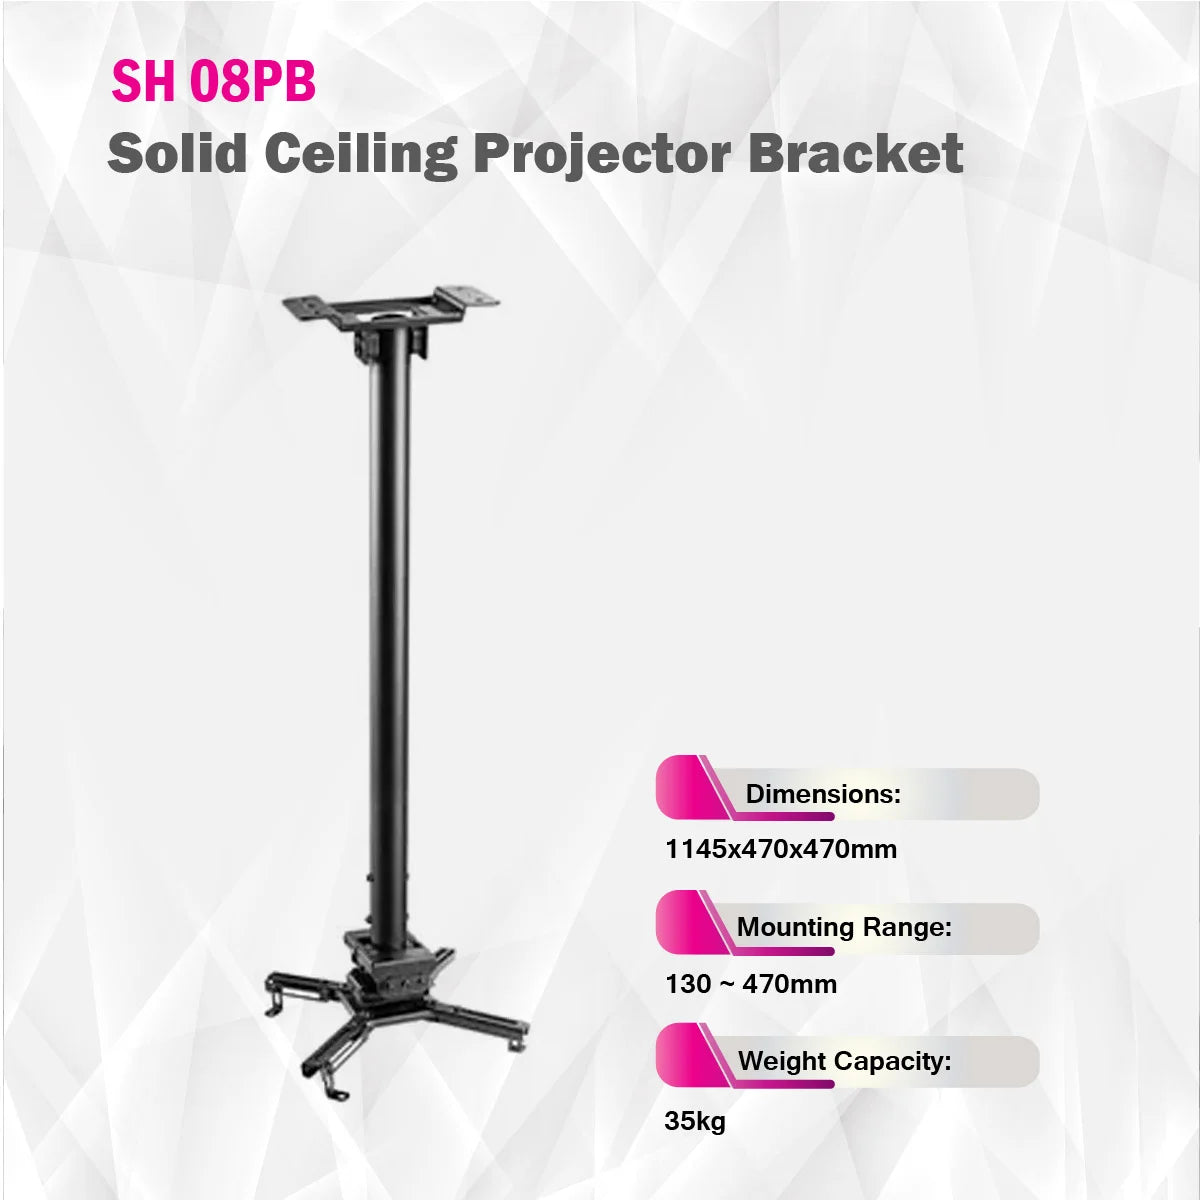 SkillTech - SH 08PB - Solid Ceiling Projector Bracket